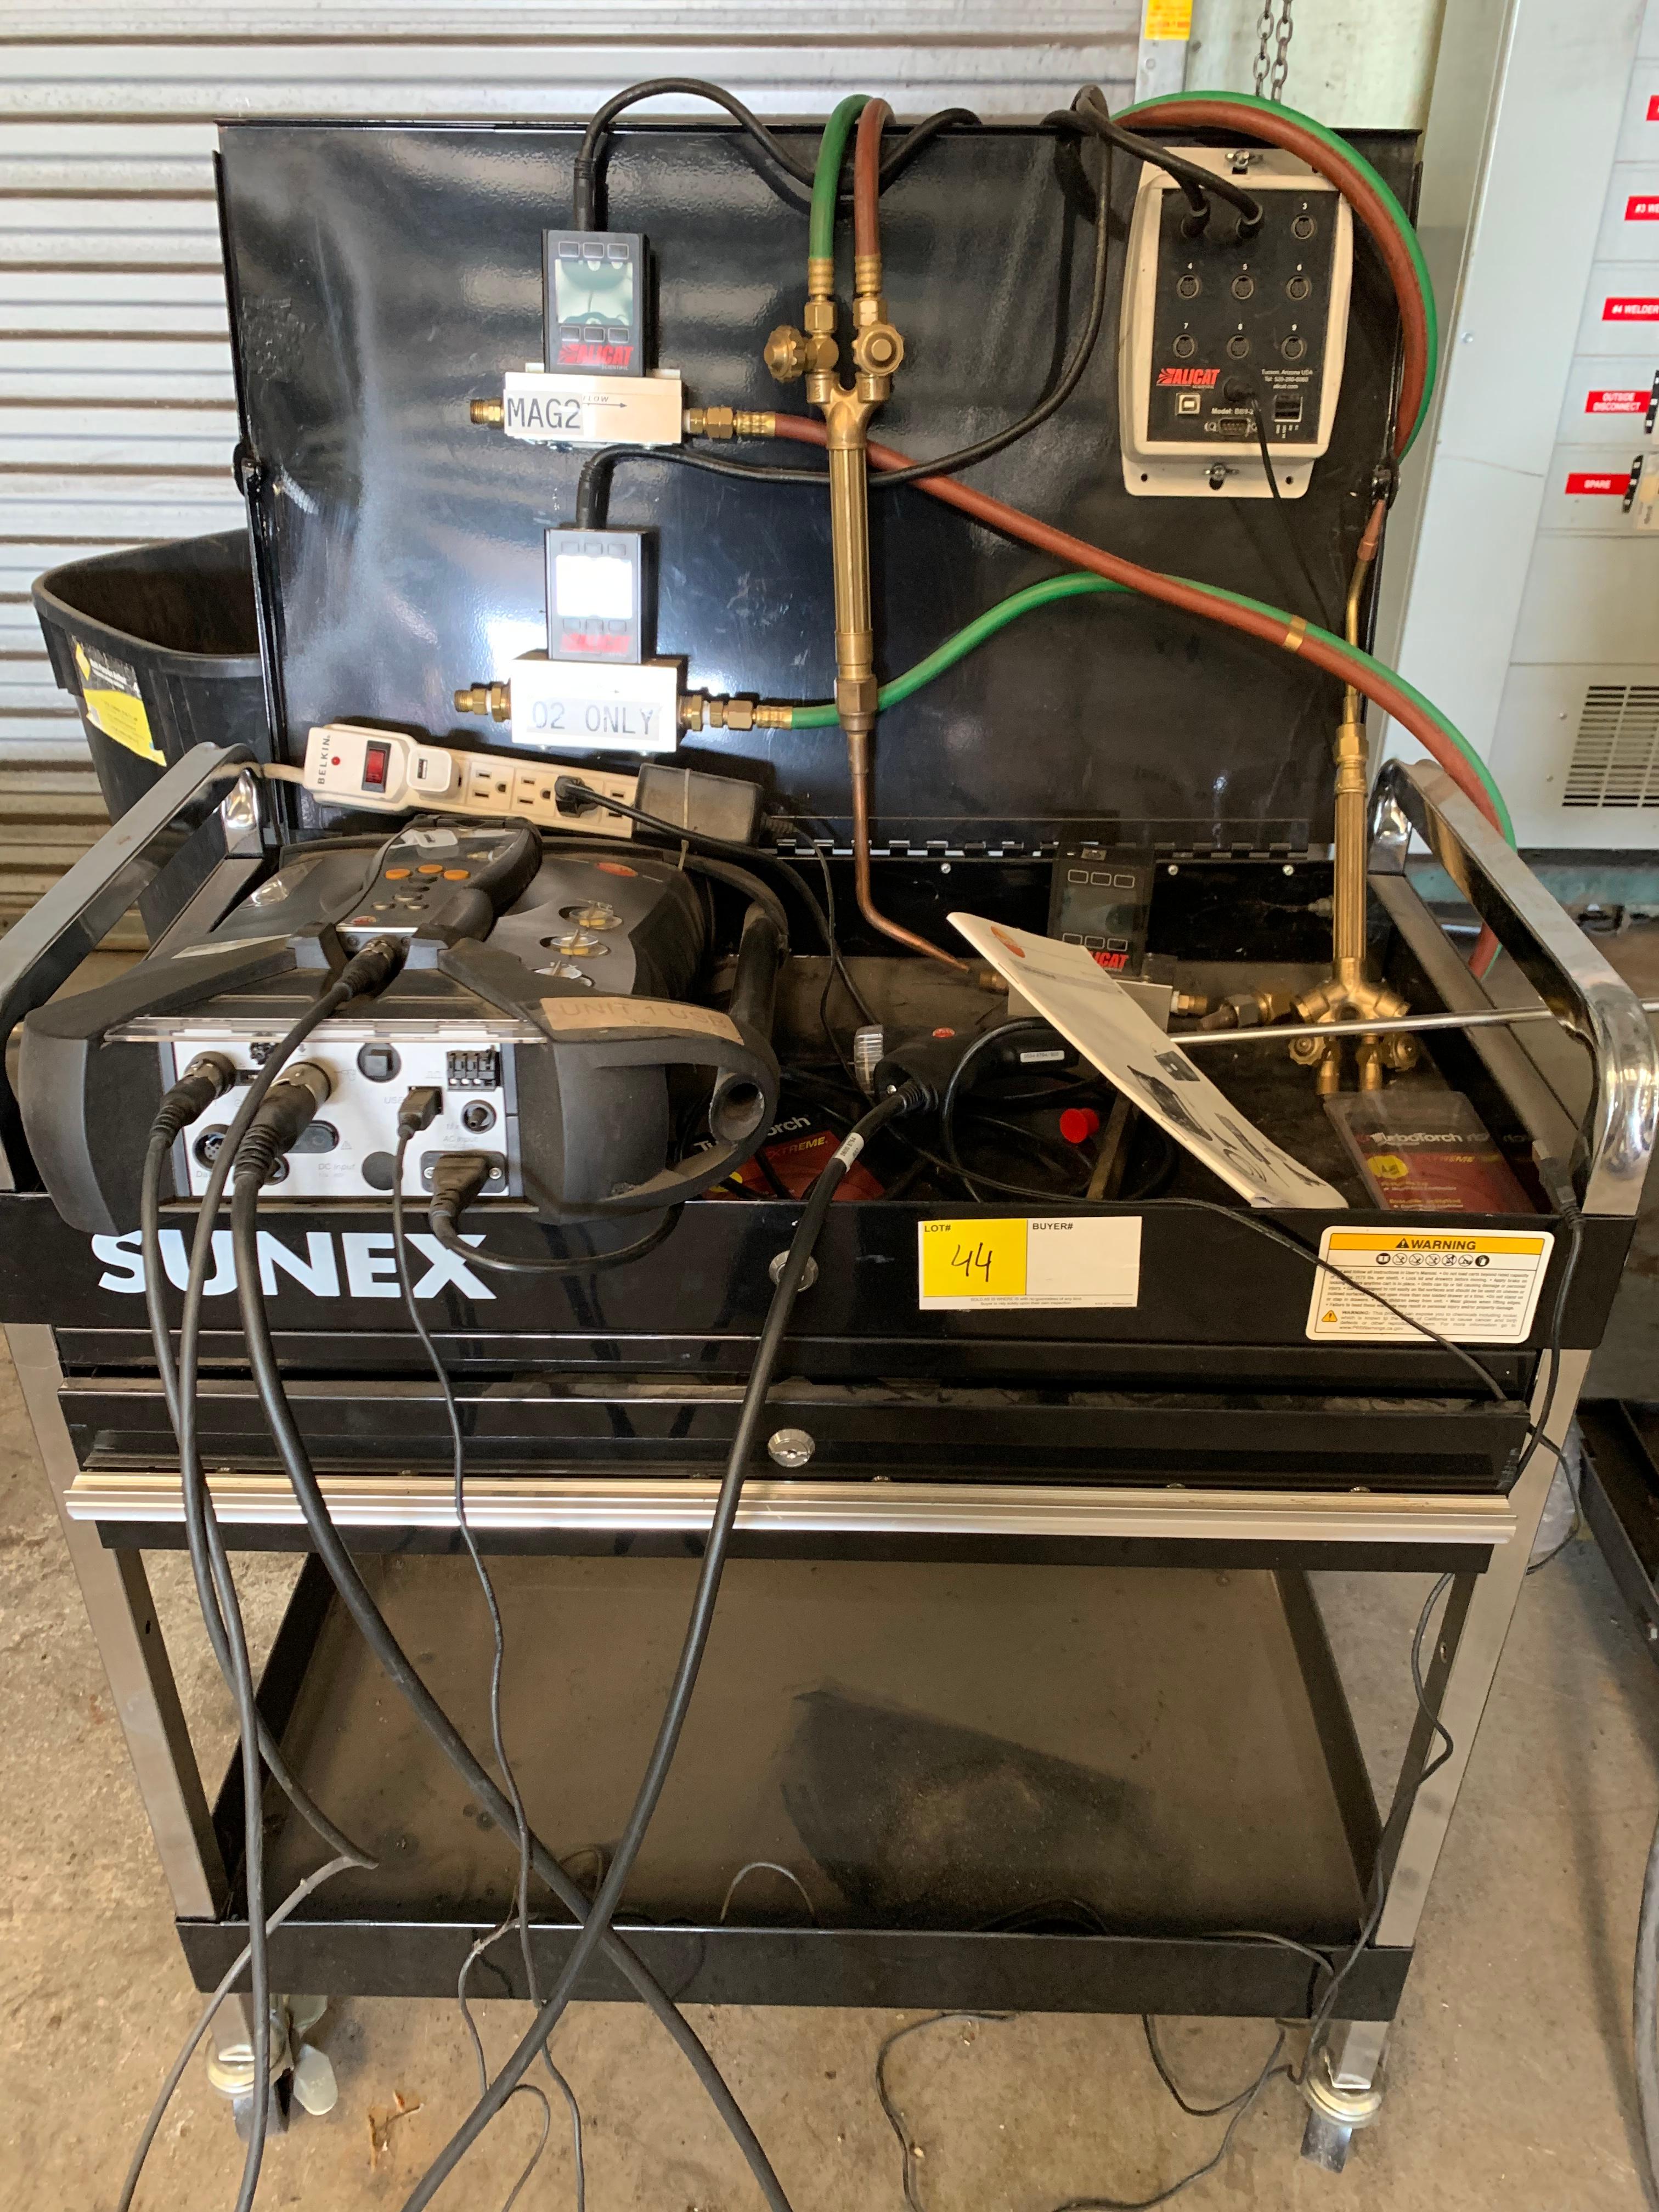 Testo 350 Portable Emission Analyzer, with Alicat Flow Meters on SUNEX cart